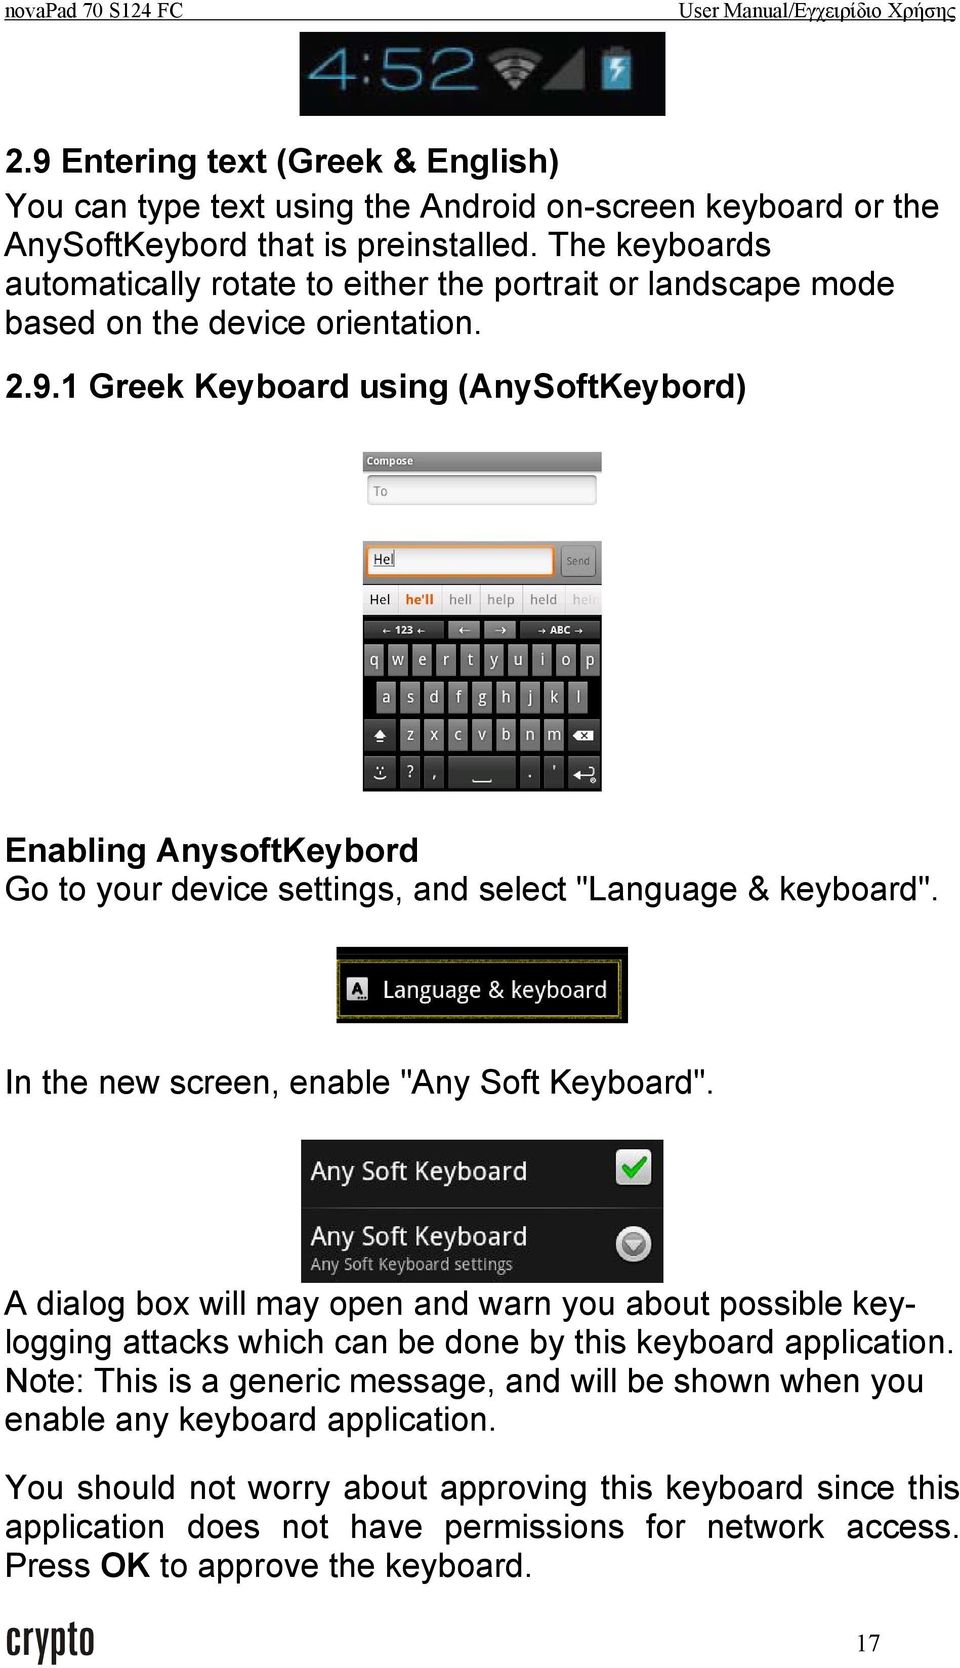 1 Greek Keyboard using (AnySoftKeybord) Enabling AnysoftKeybord Go to your device settings, and select "Language & keyboard". In the new screen, enable "Any Soft Keyboard".